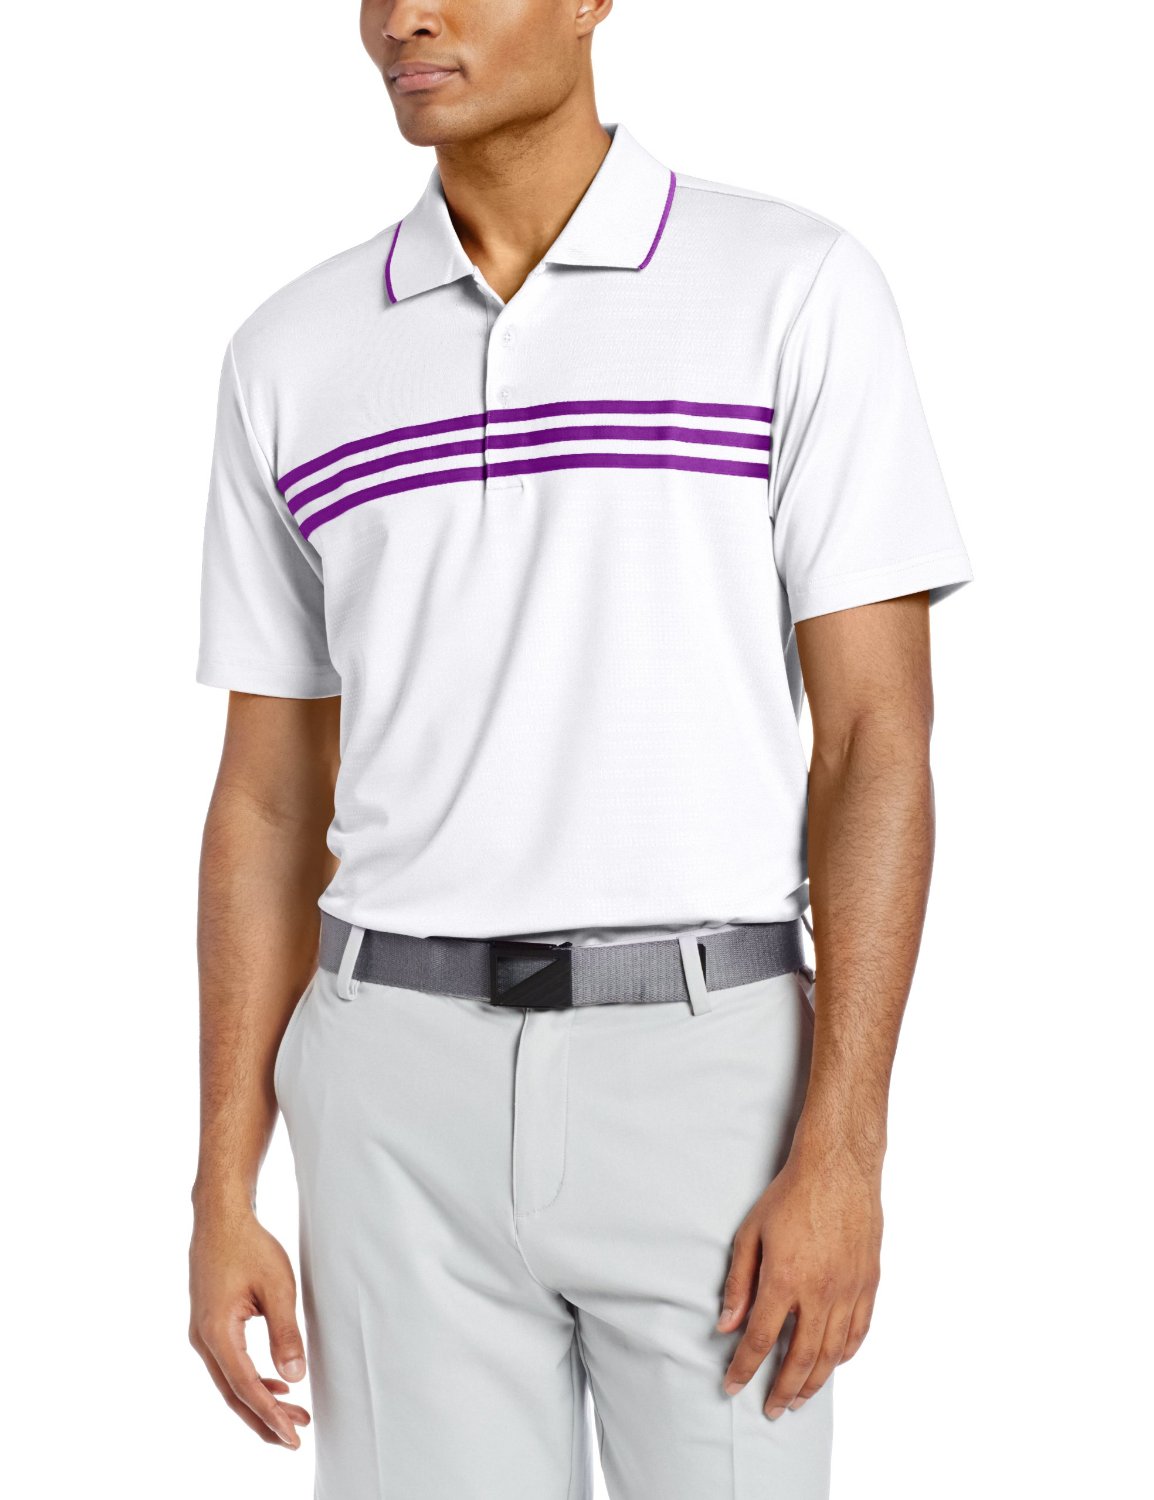 adidas golf men's puremotion climacool 3 stripes chest polo